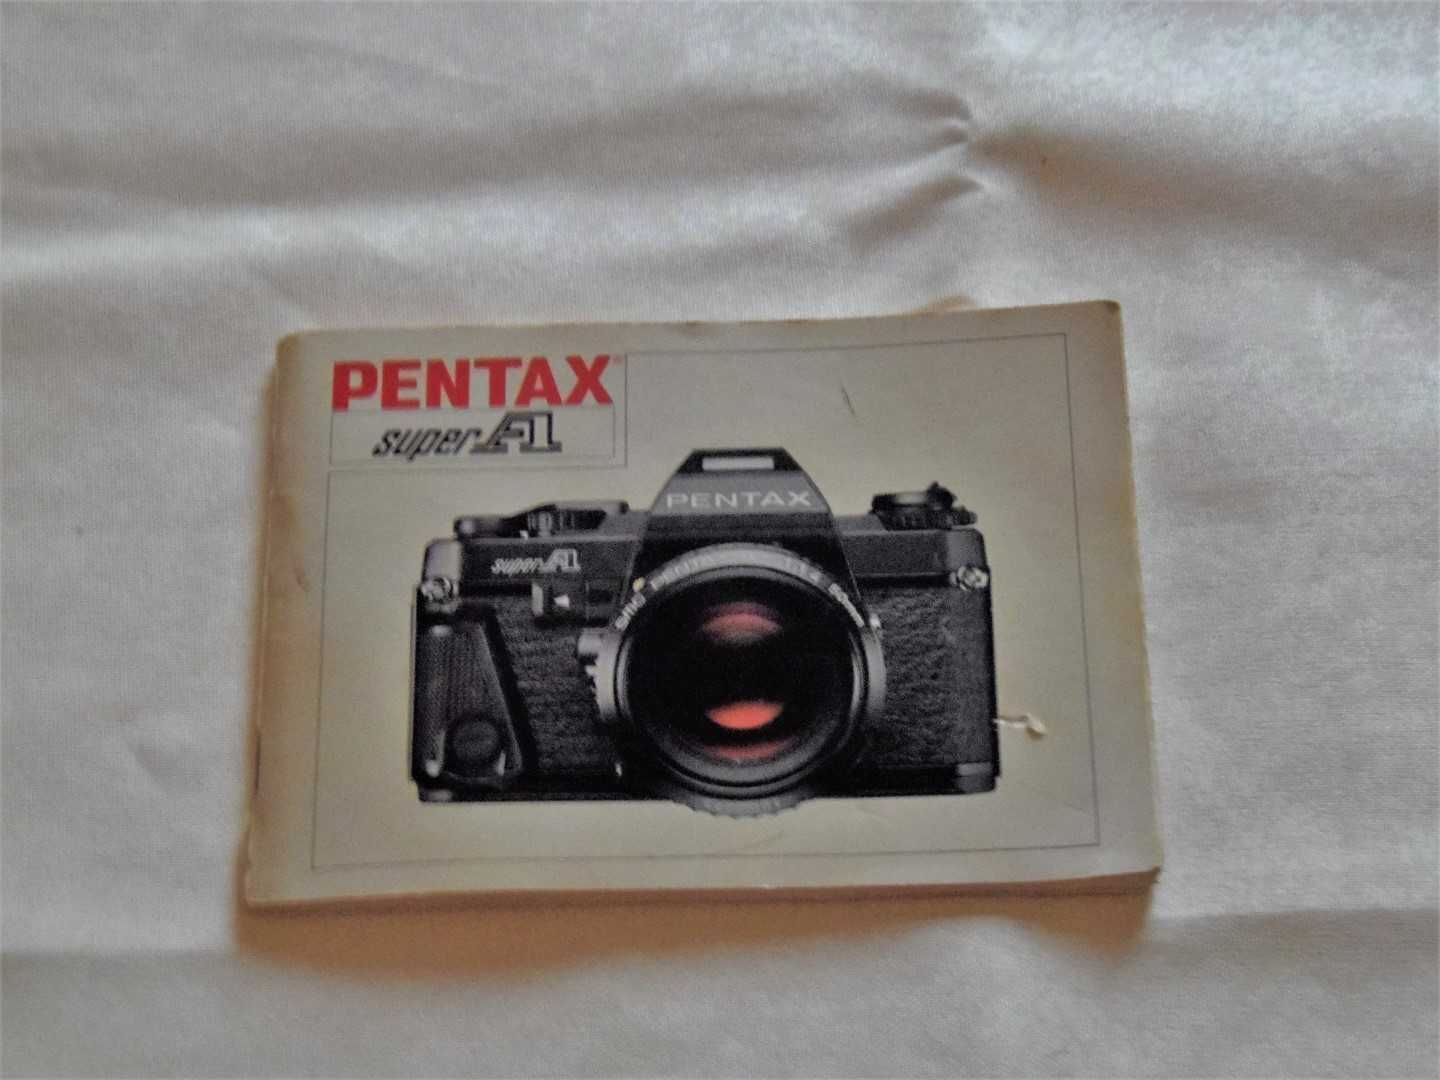 Pentax Super A aparat.